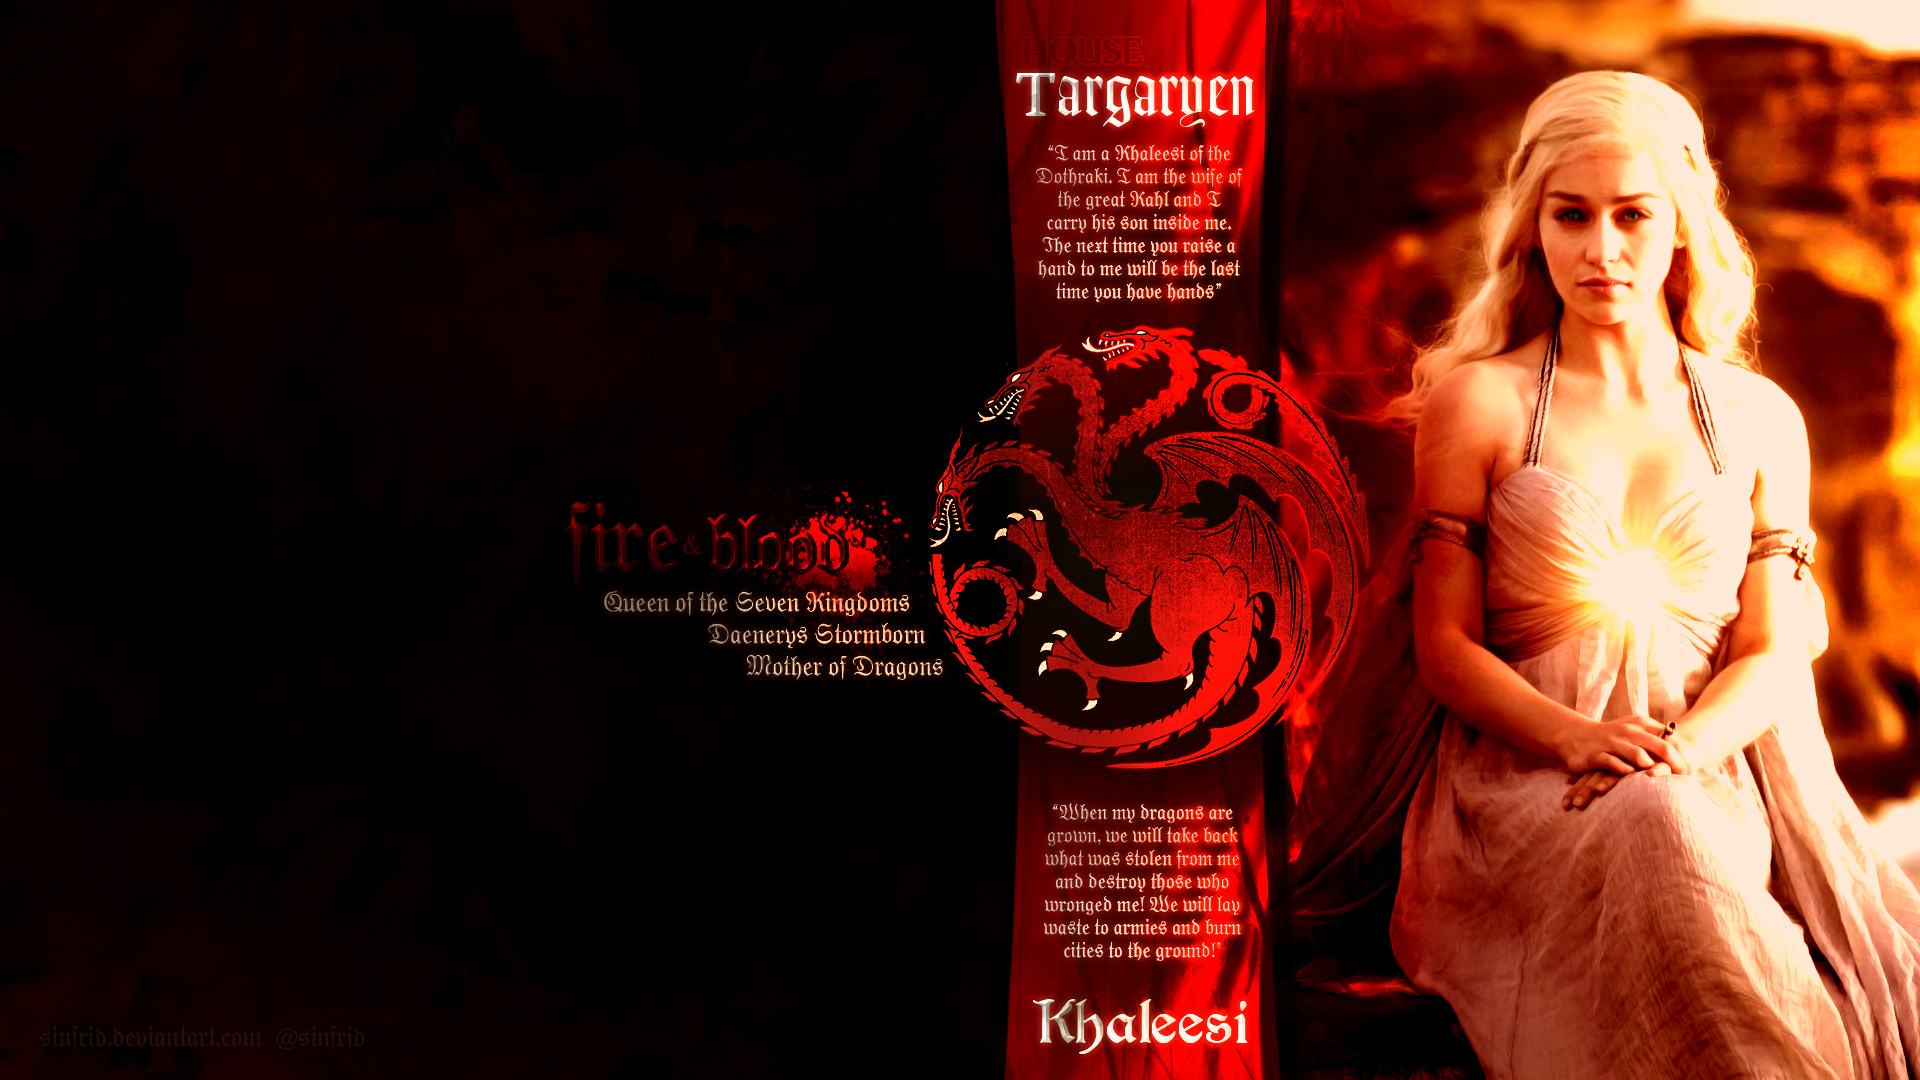 Game Of Thrones Daenerys Targaryen Dress 4K HD Wallpapers | HD Wallpapers |  ID #31961